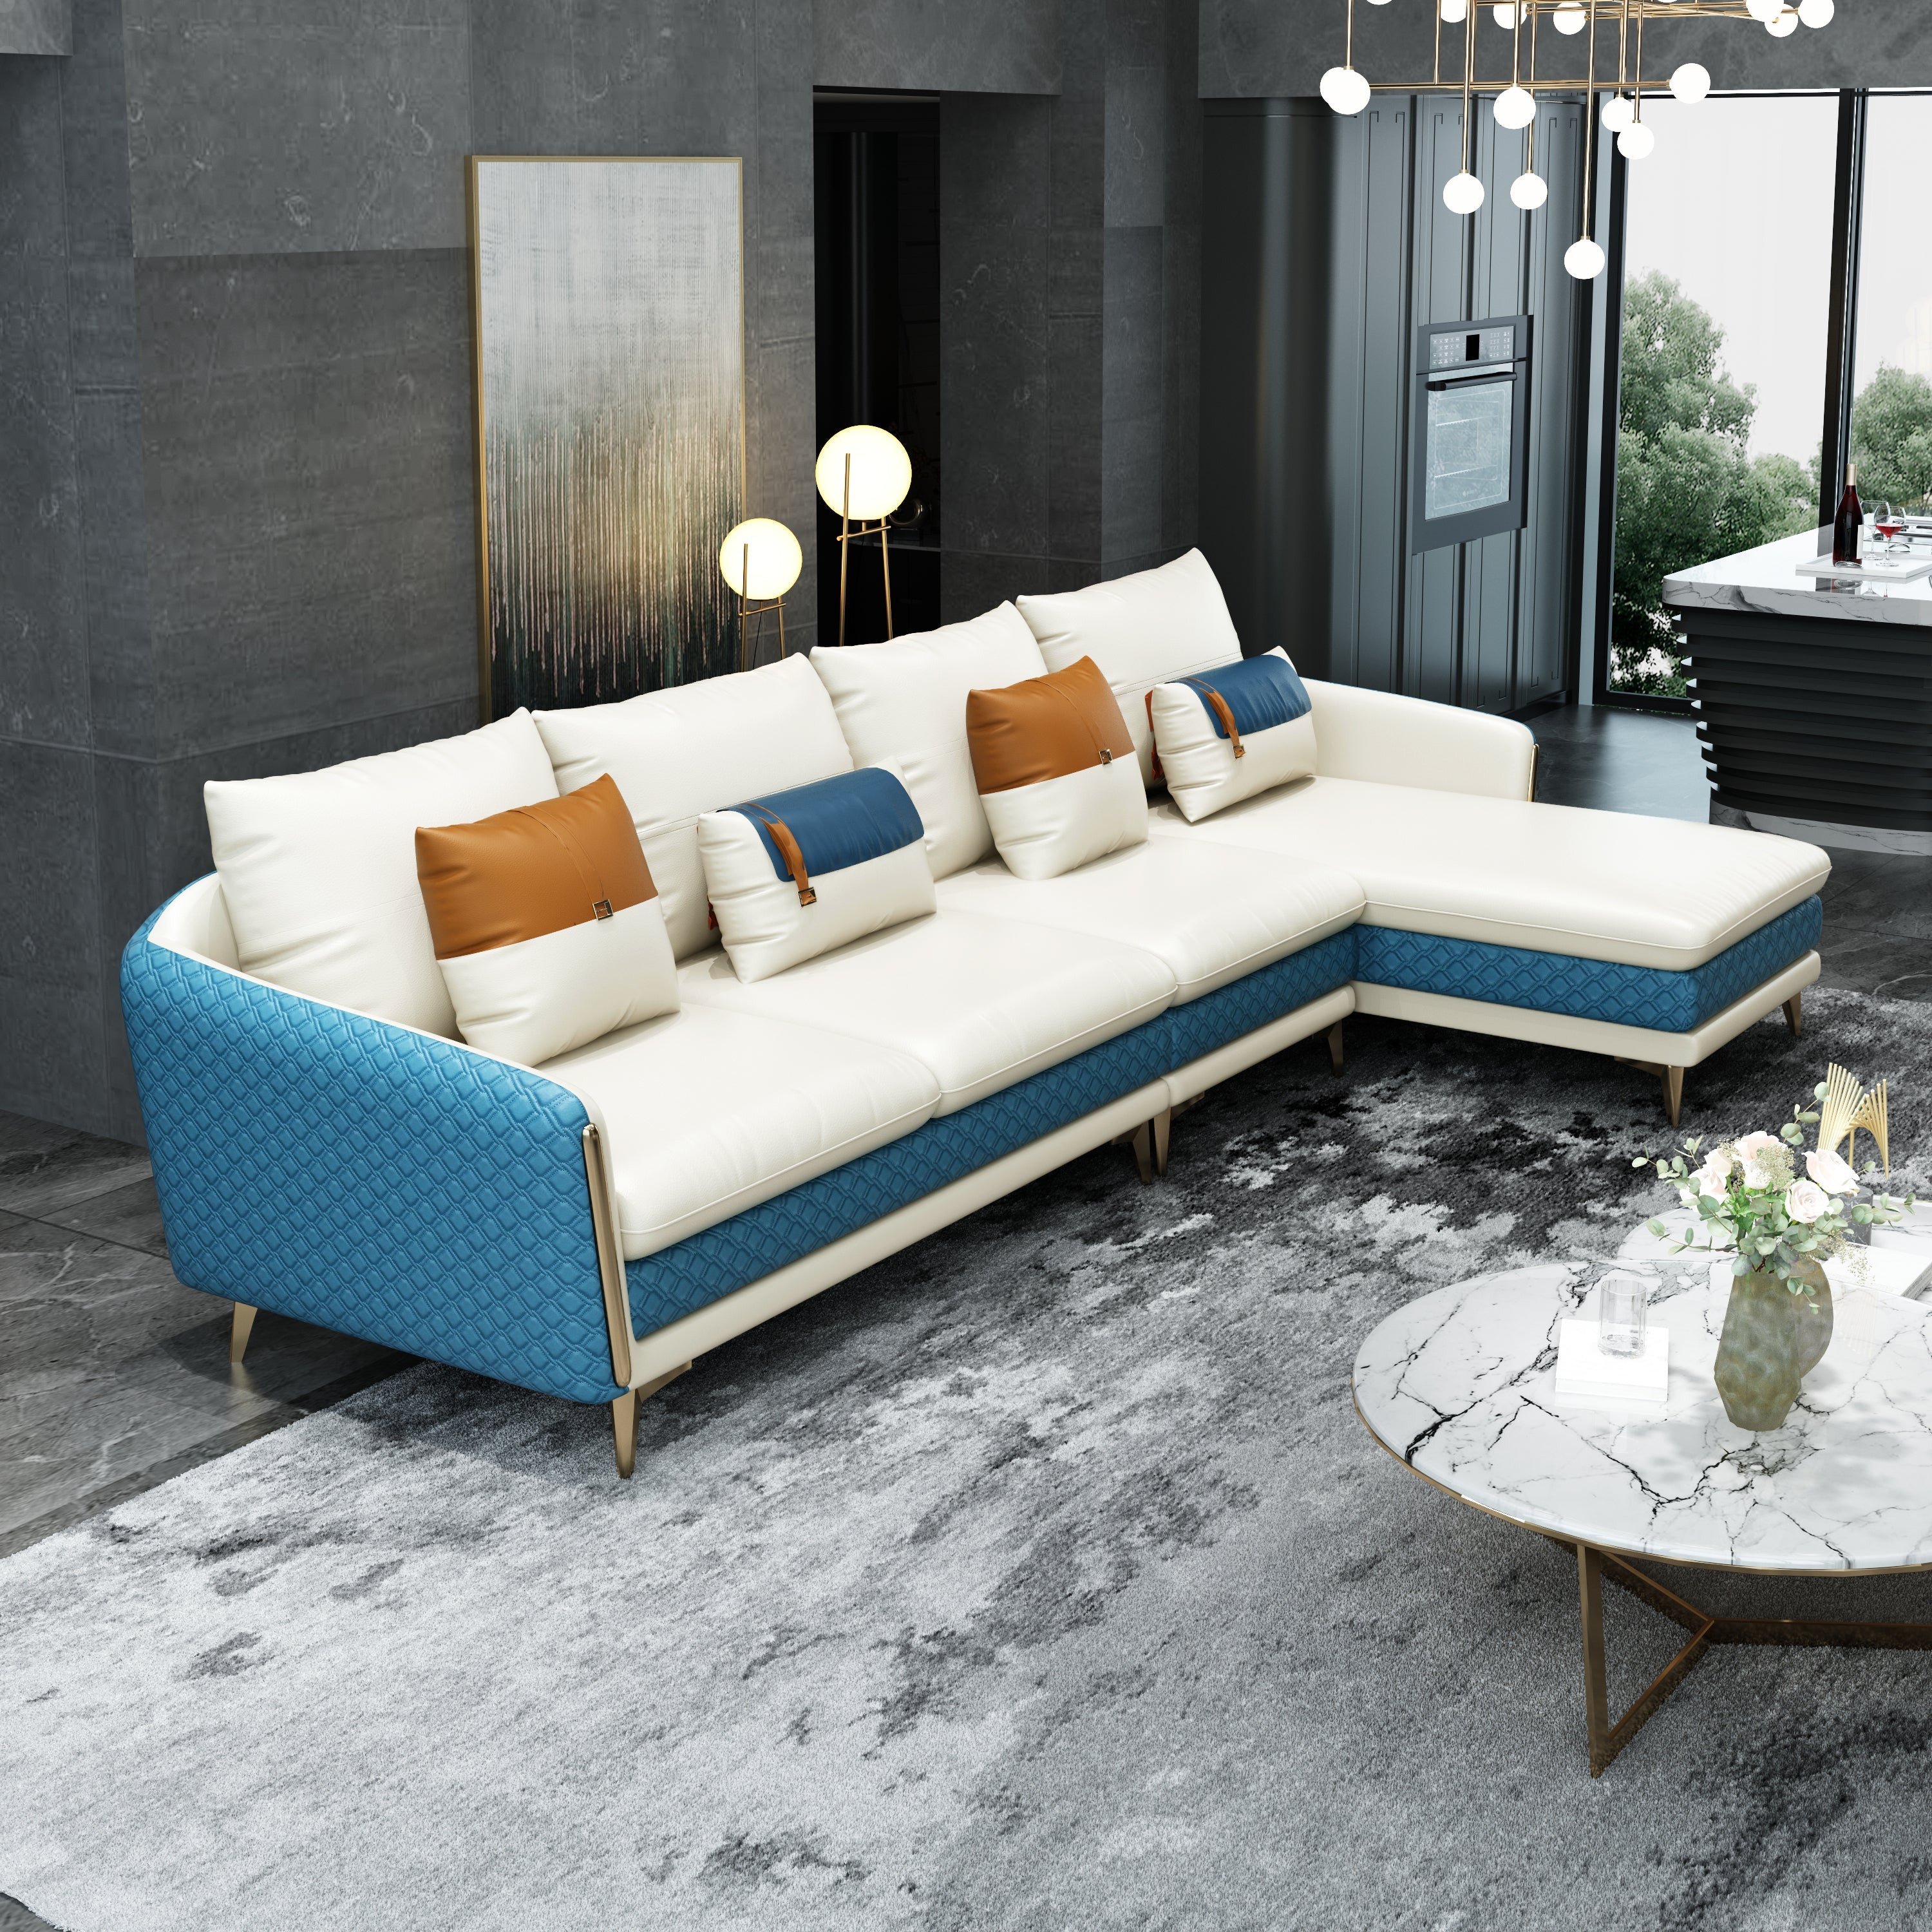 European Furniture - Icaro Sectional RHF White-Blue Italian Leather - EF-64439R-4RHF - New Star Living